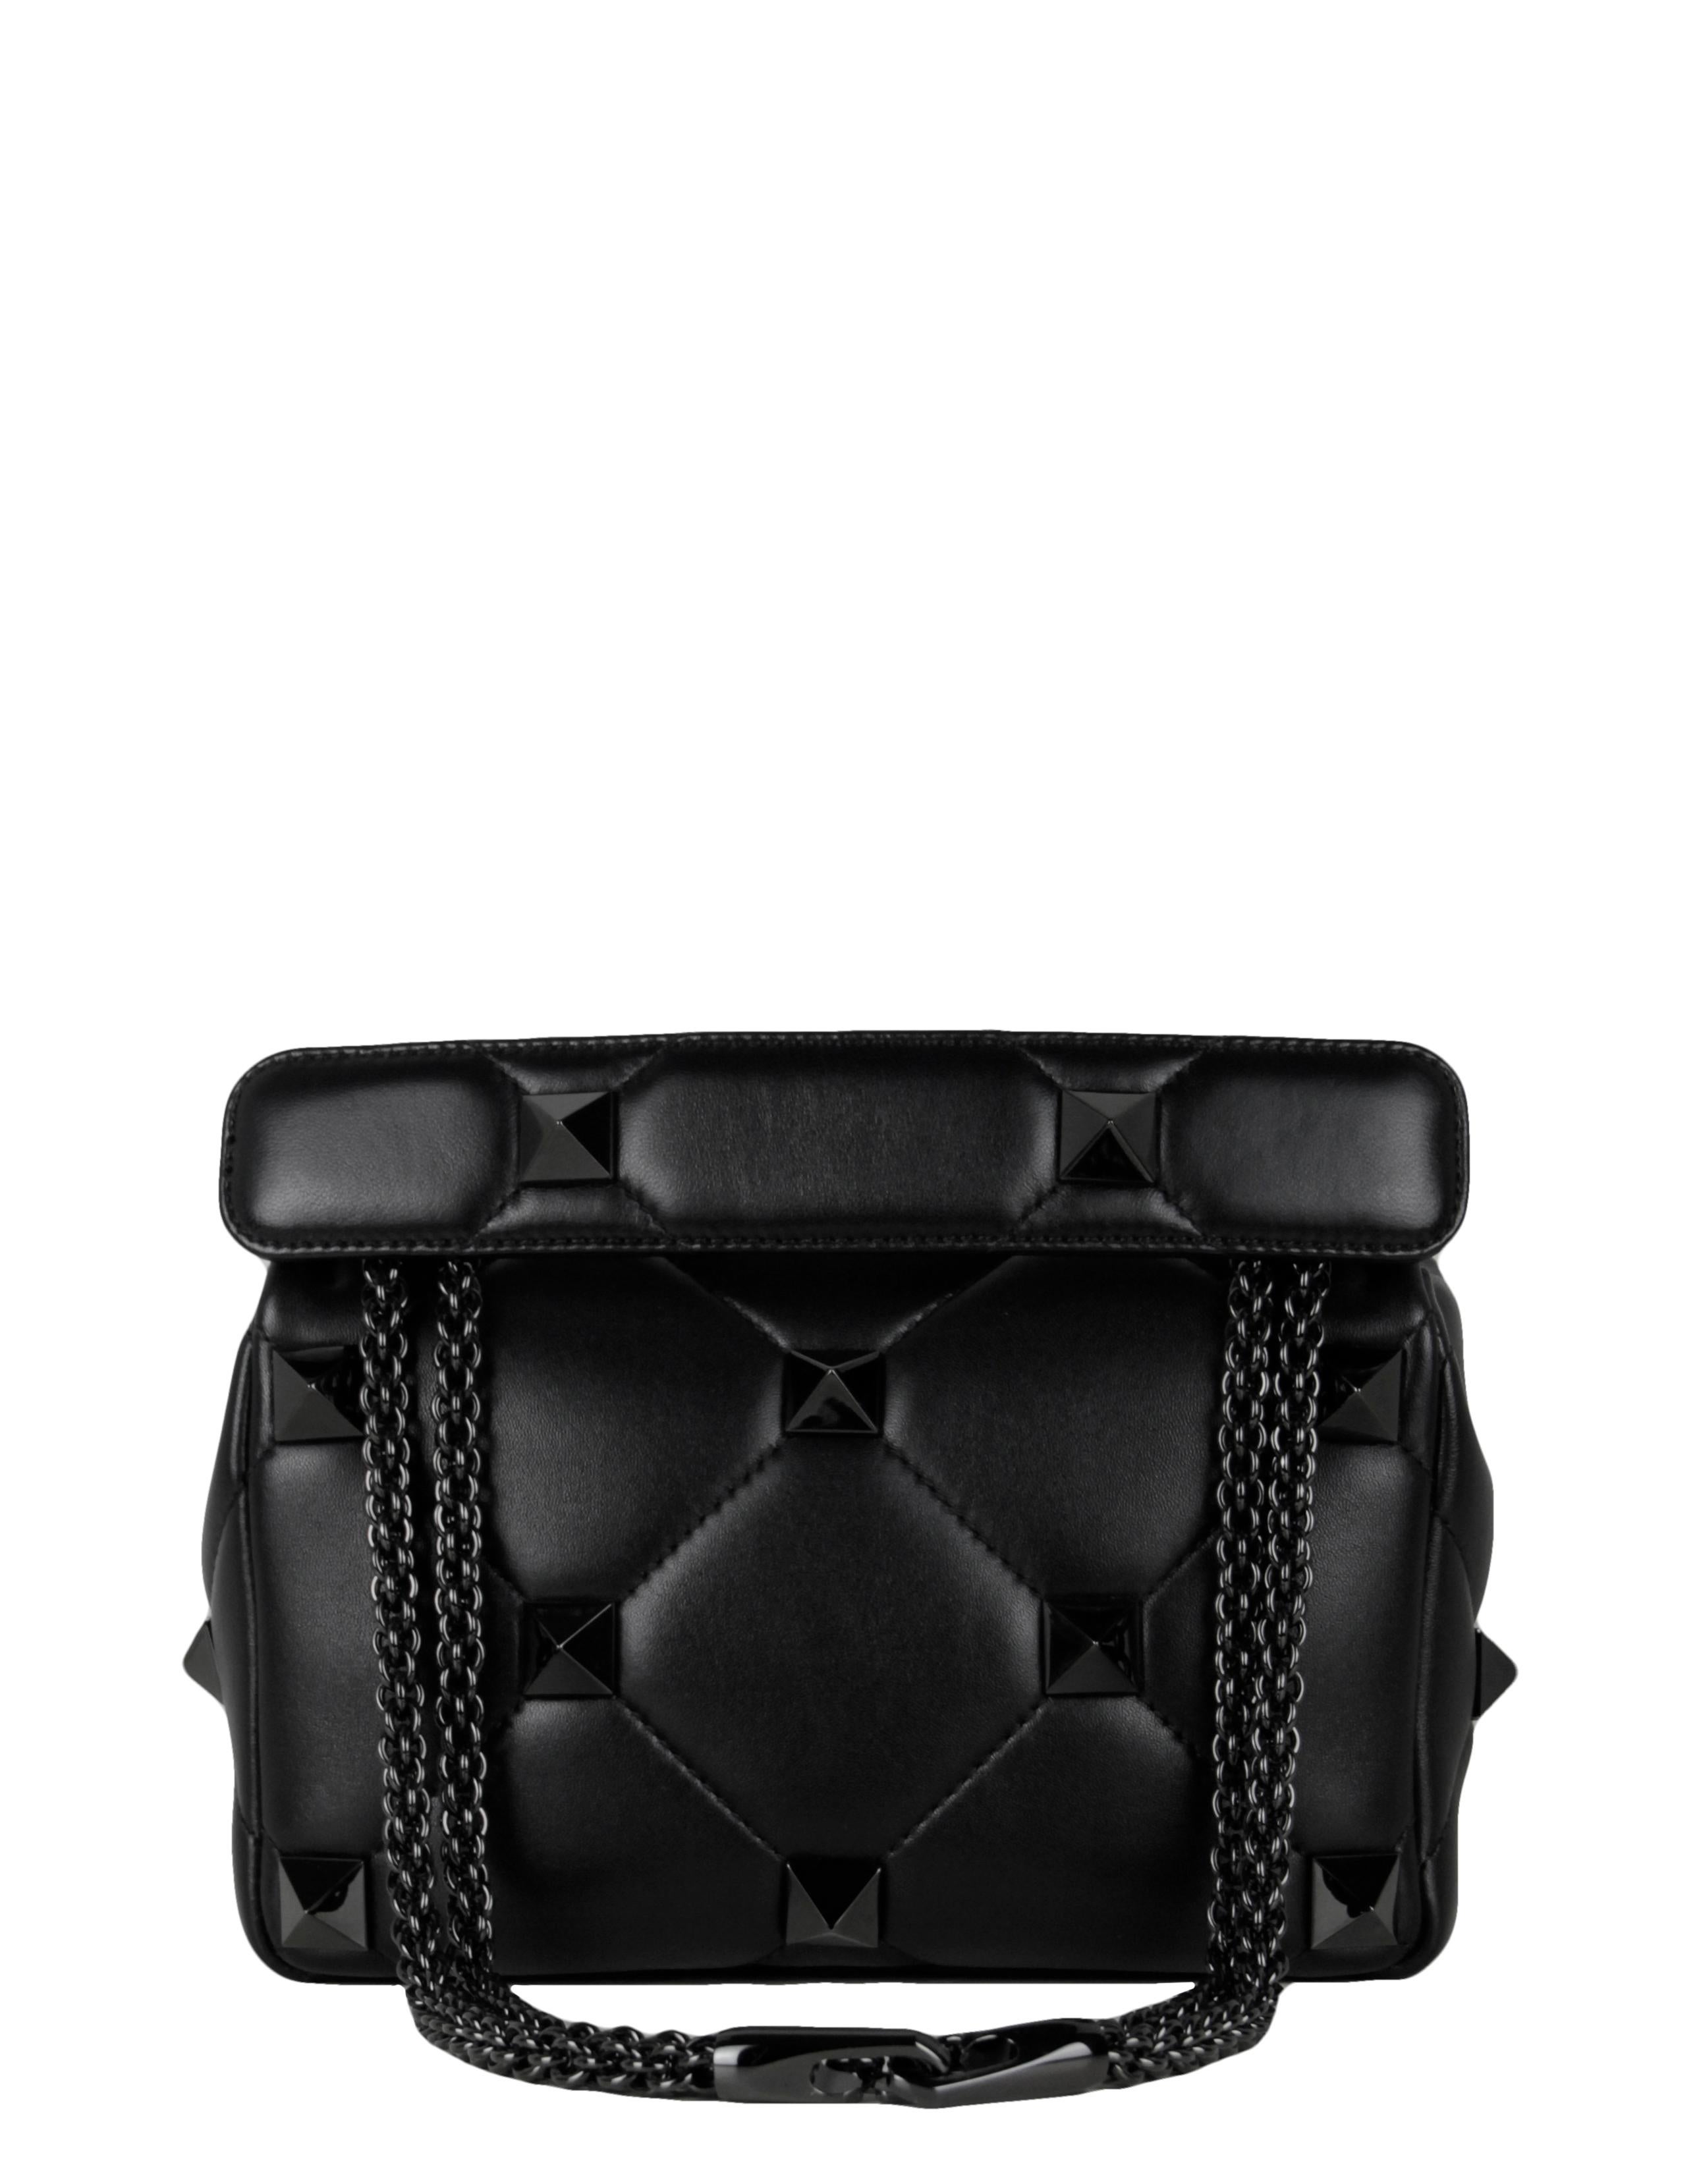 valentino black studded bag